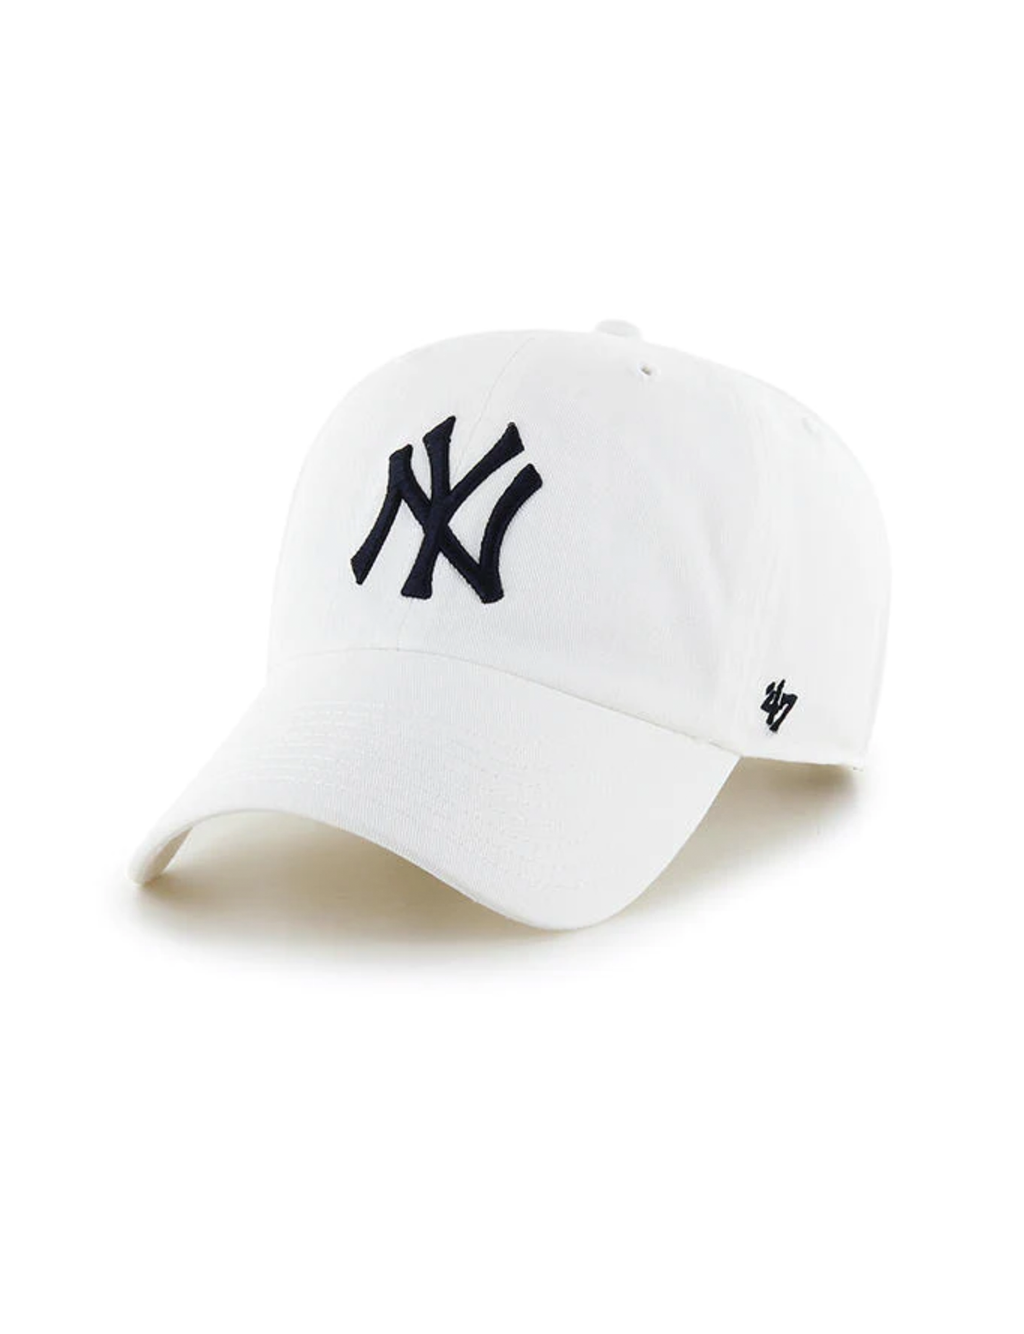 NY Yankees Basic Ball Cap, White/Navy